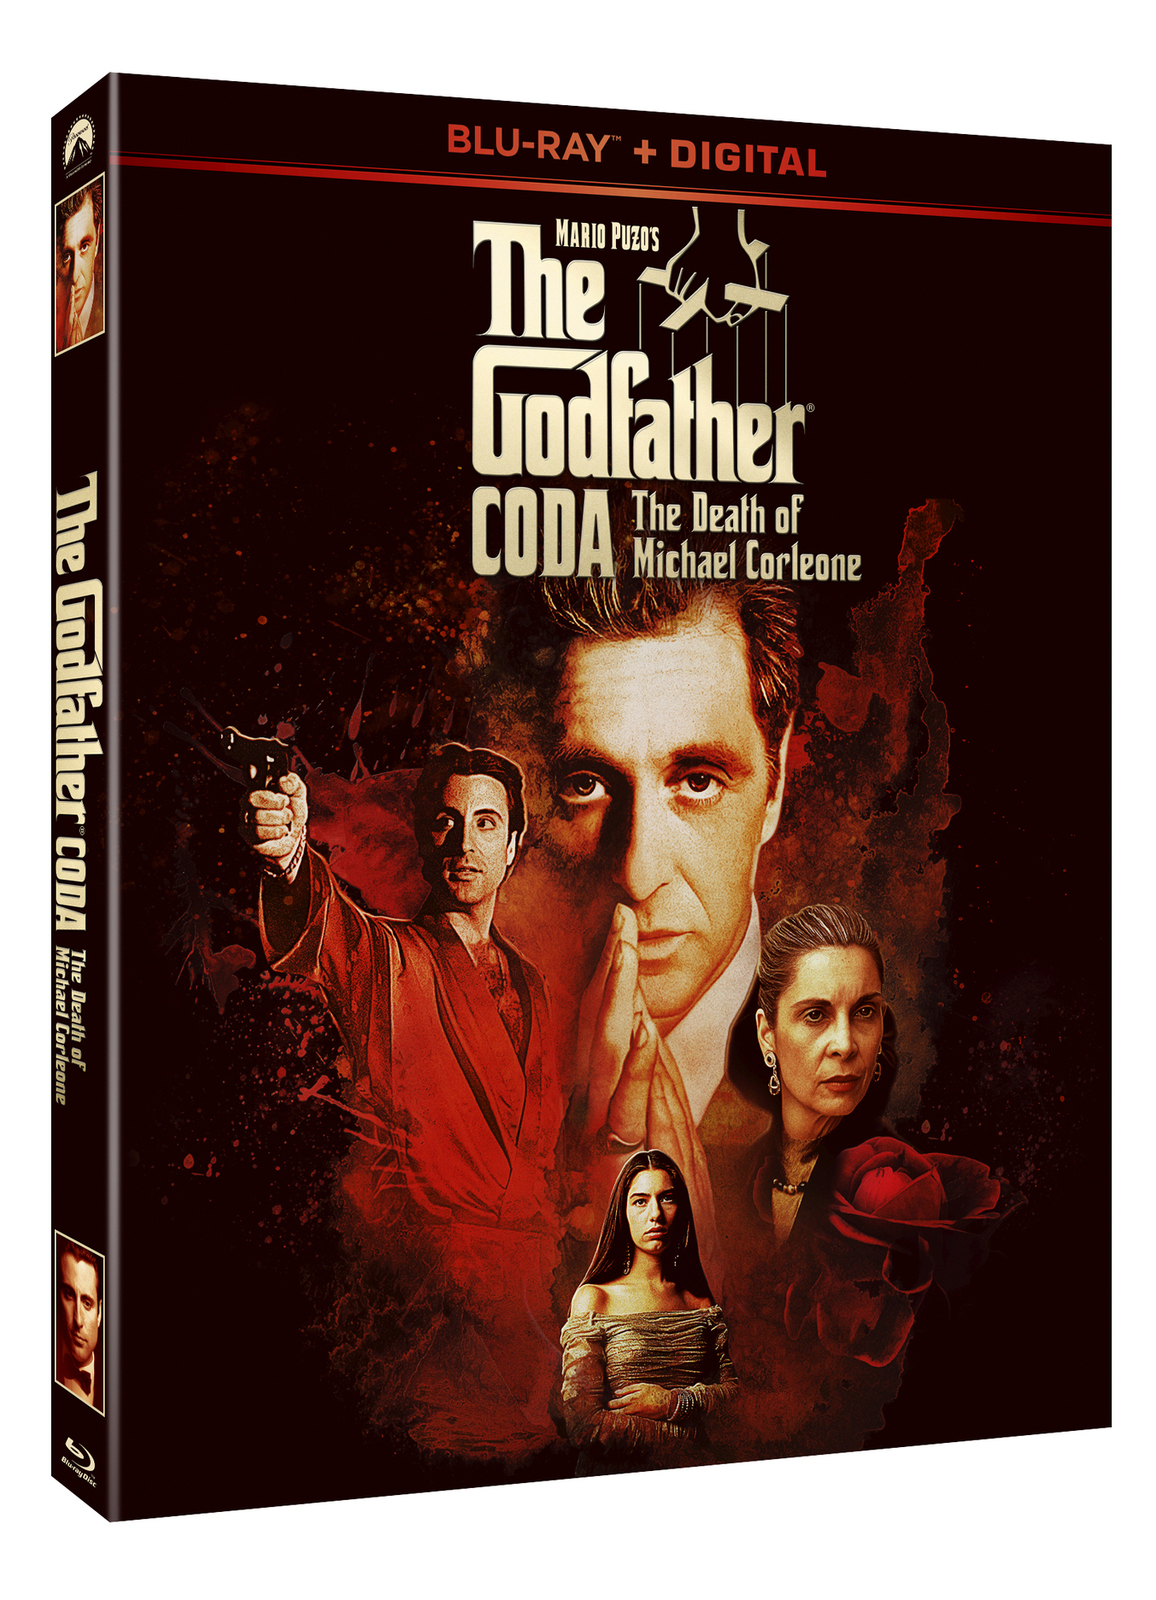 Mario Puzo'S The Godfather, CodaThe Death Of Michael Corleone [Includes Digital